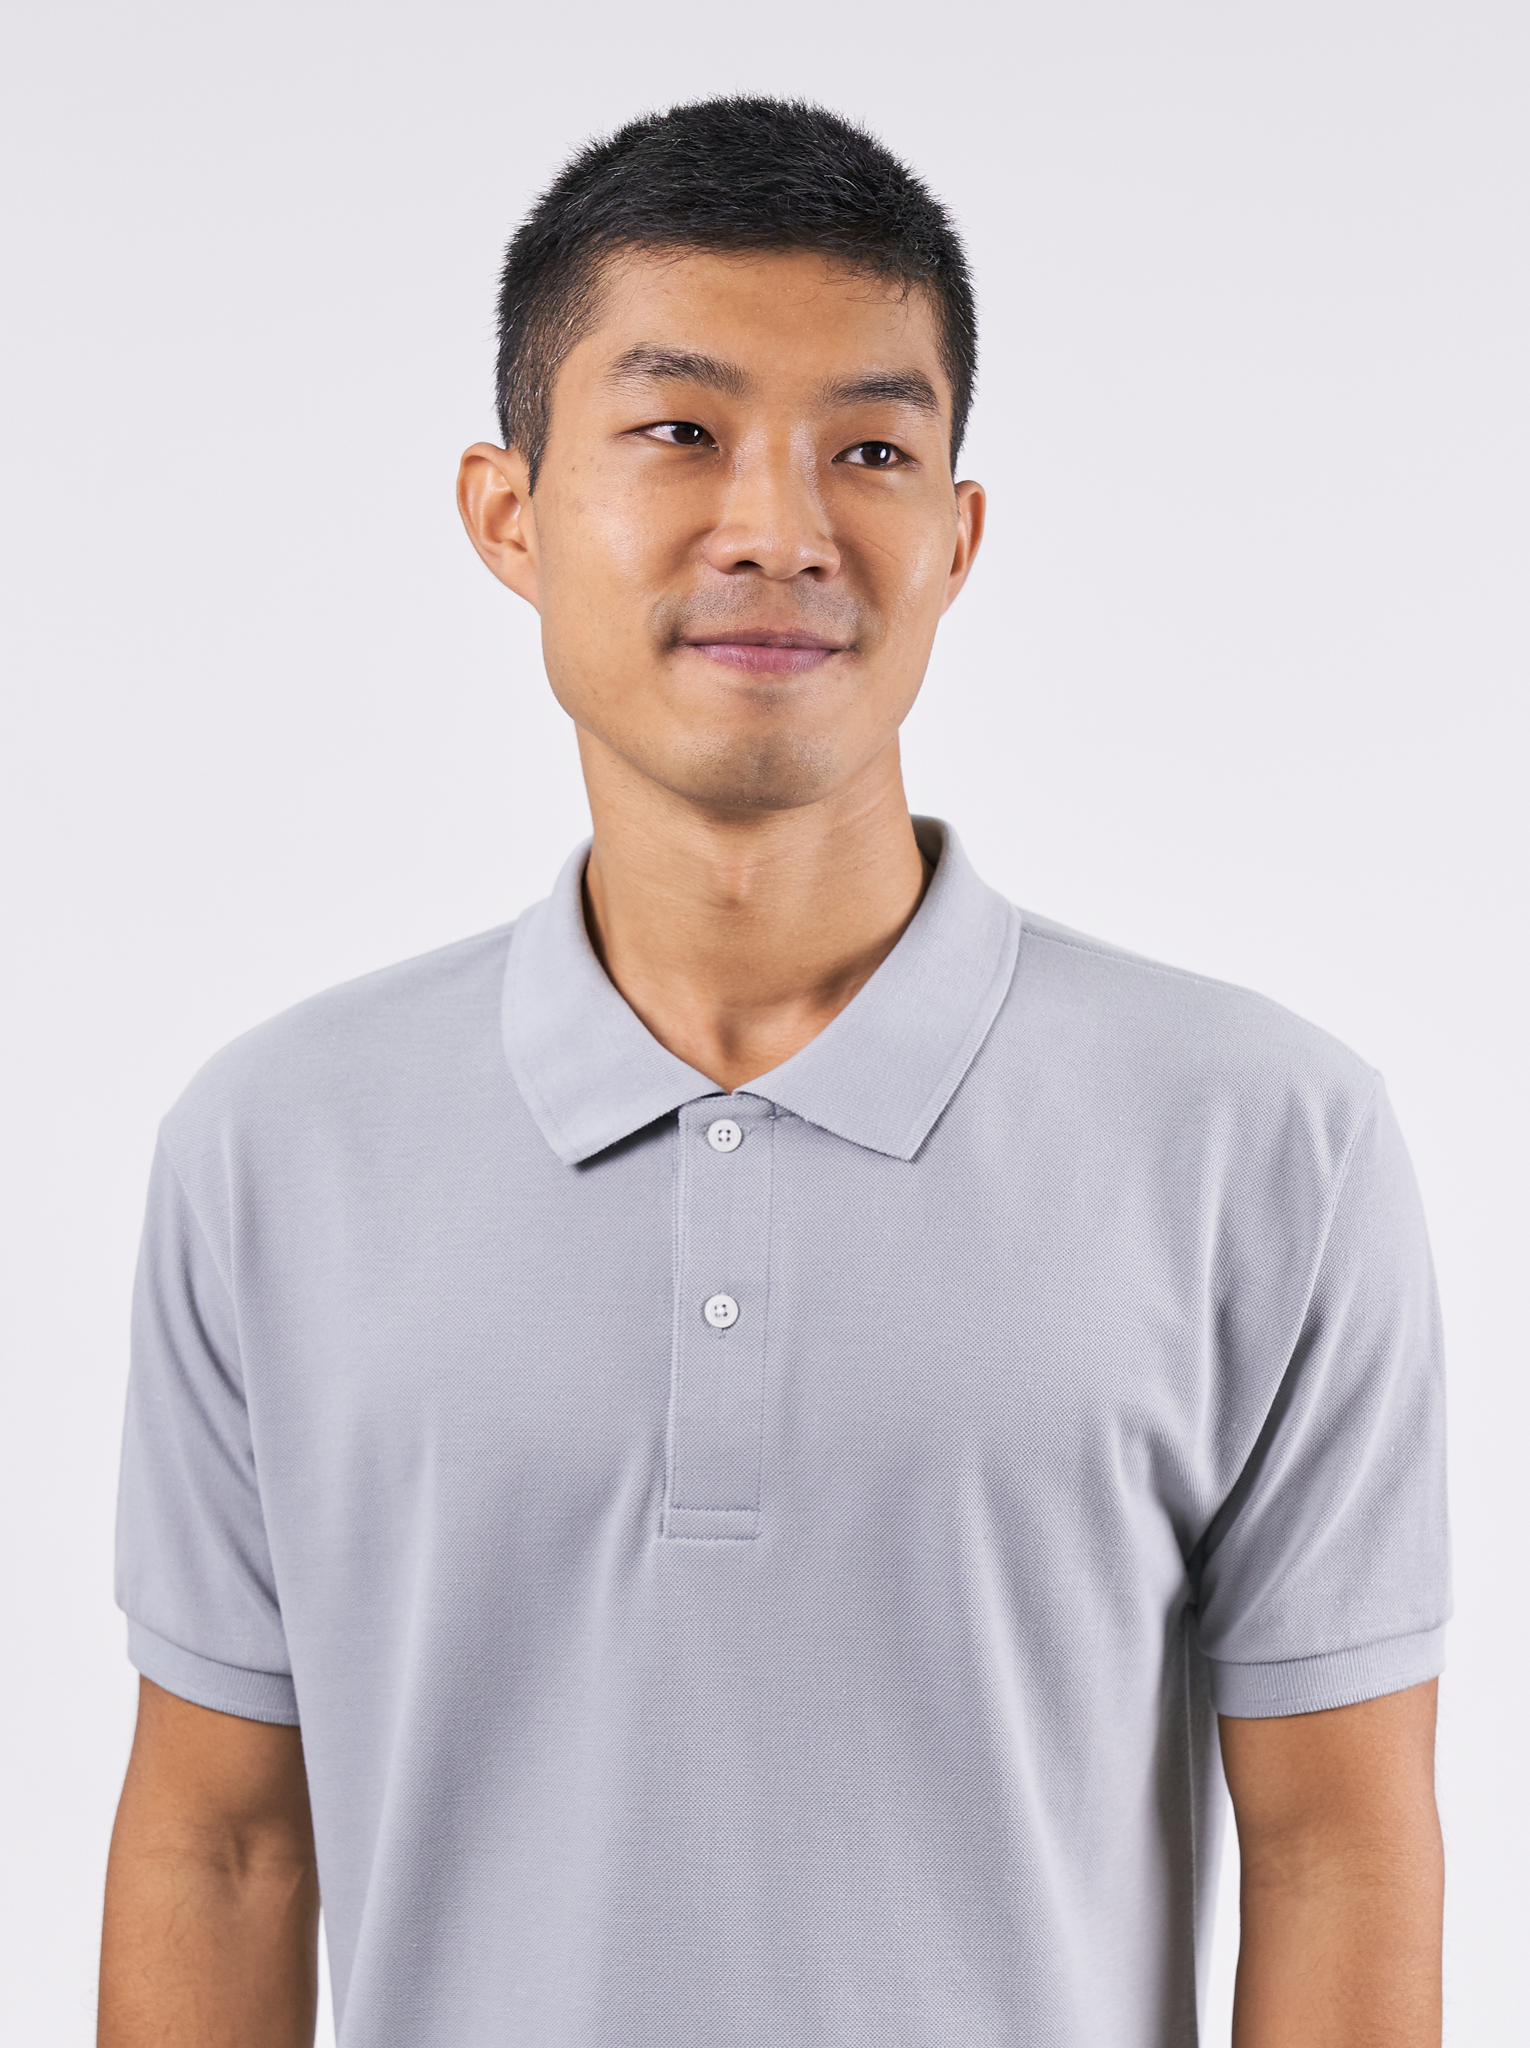 Polo Shirt เสื้อโปโล (Silver Grey, สีเทาเงิน)(Unisex)